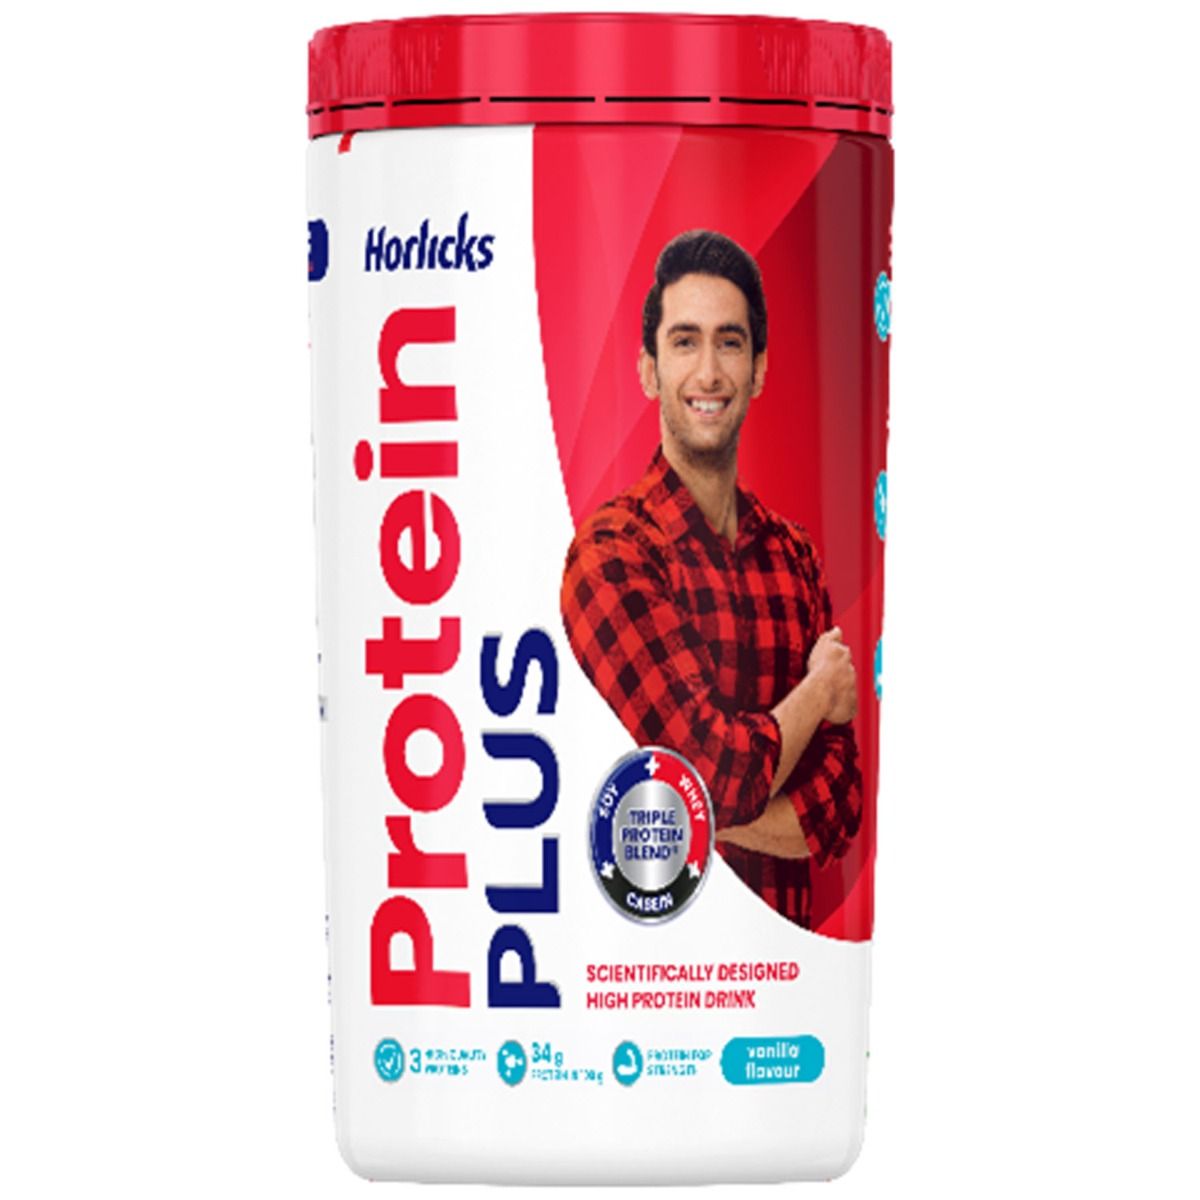 Horlicks Protein+ Vanilla Flavoured Health and Nutrition Drink, 400 gm Jar, Pack of 1 